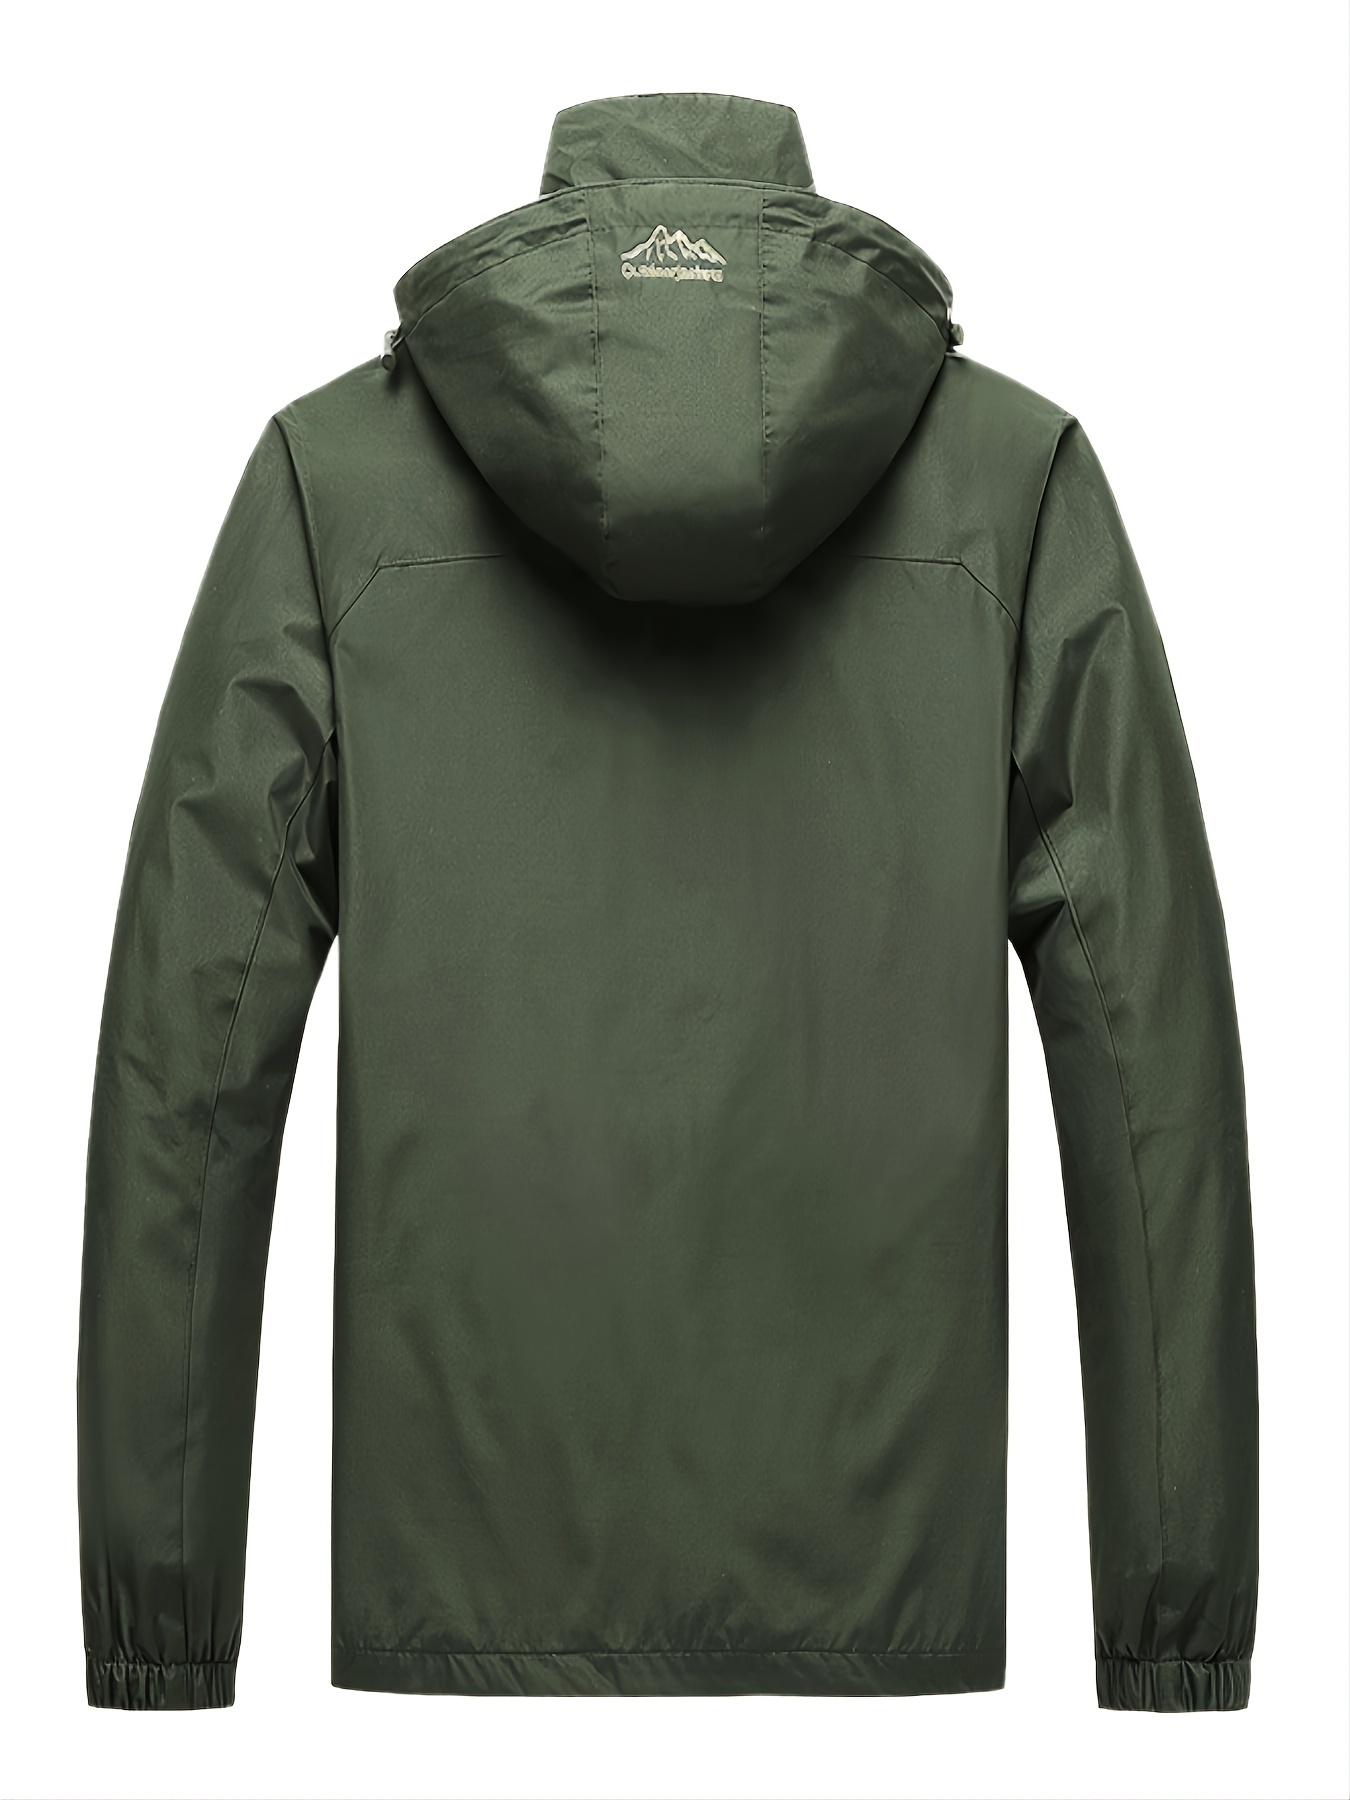 mens waterproof rain jacket lightweight raincoat windbreaker with hood for hiking travel outdoor details 20